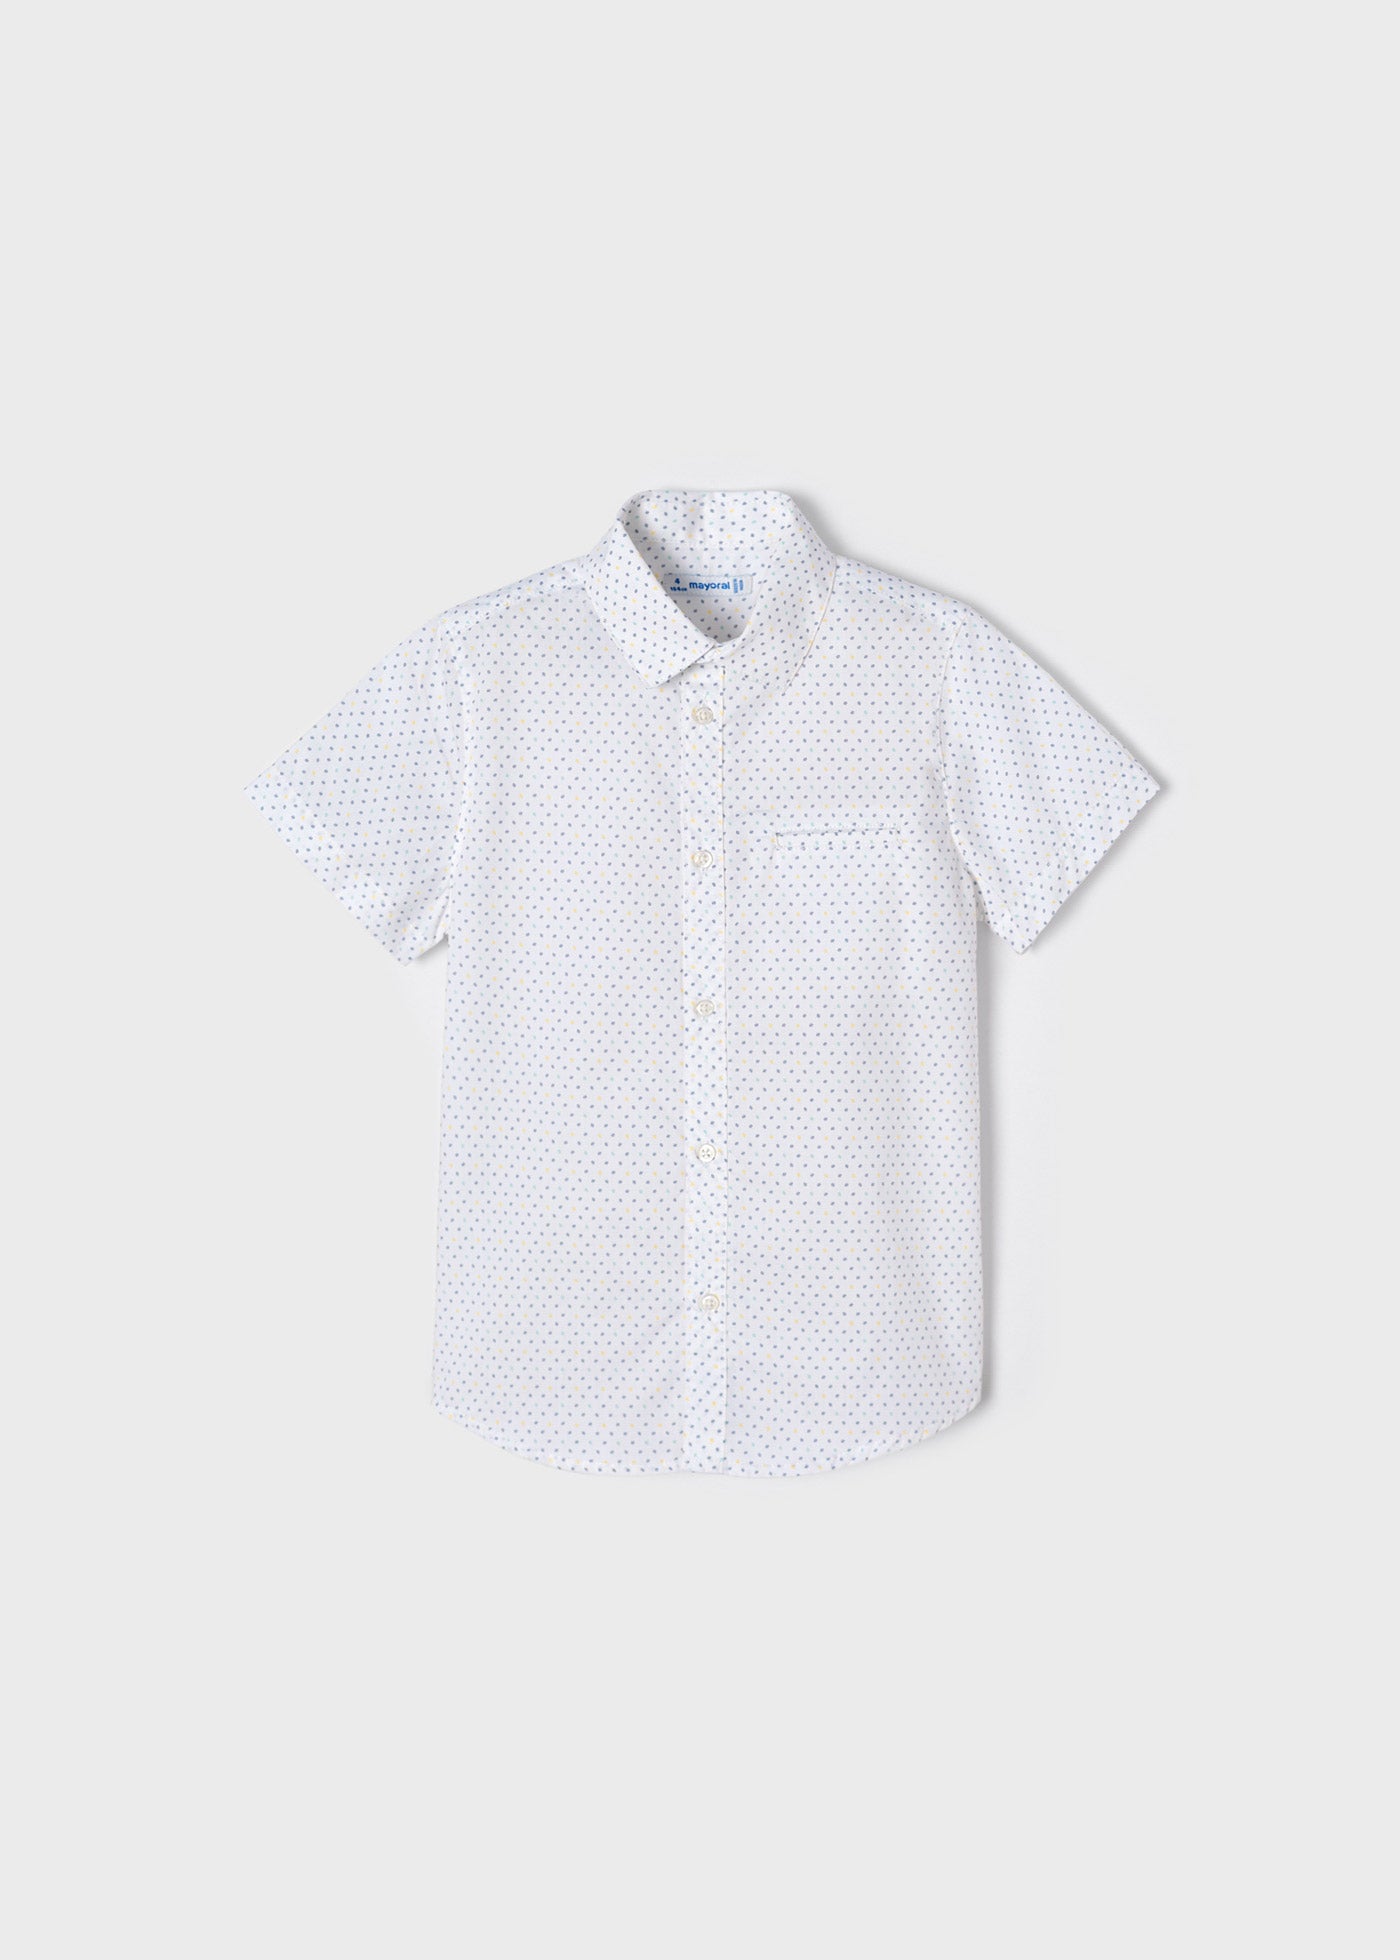 Mayoral Mini S/S Dress Shirt w/Micro Print_ White 3118-10